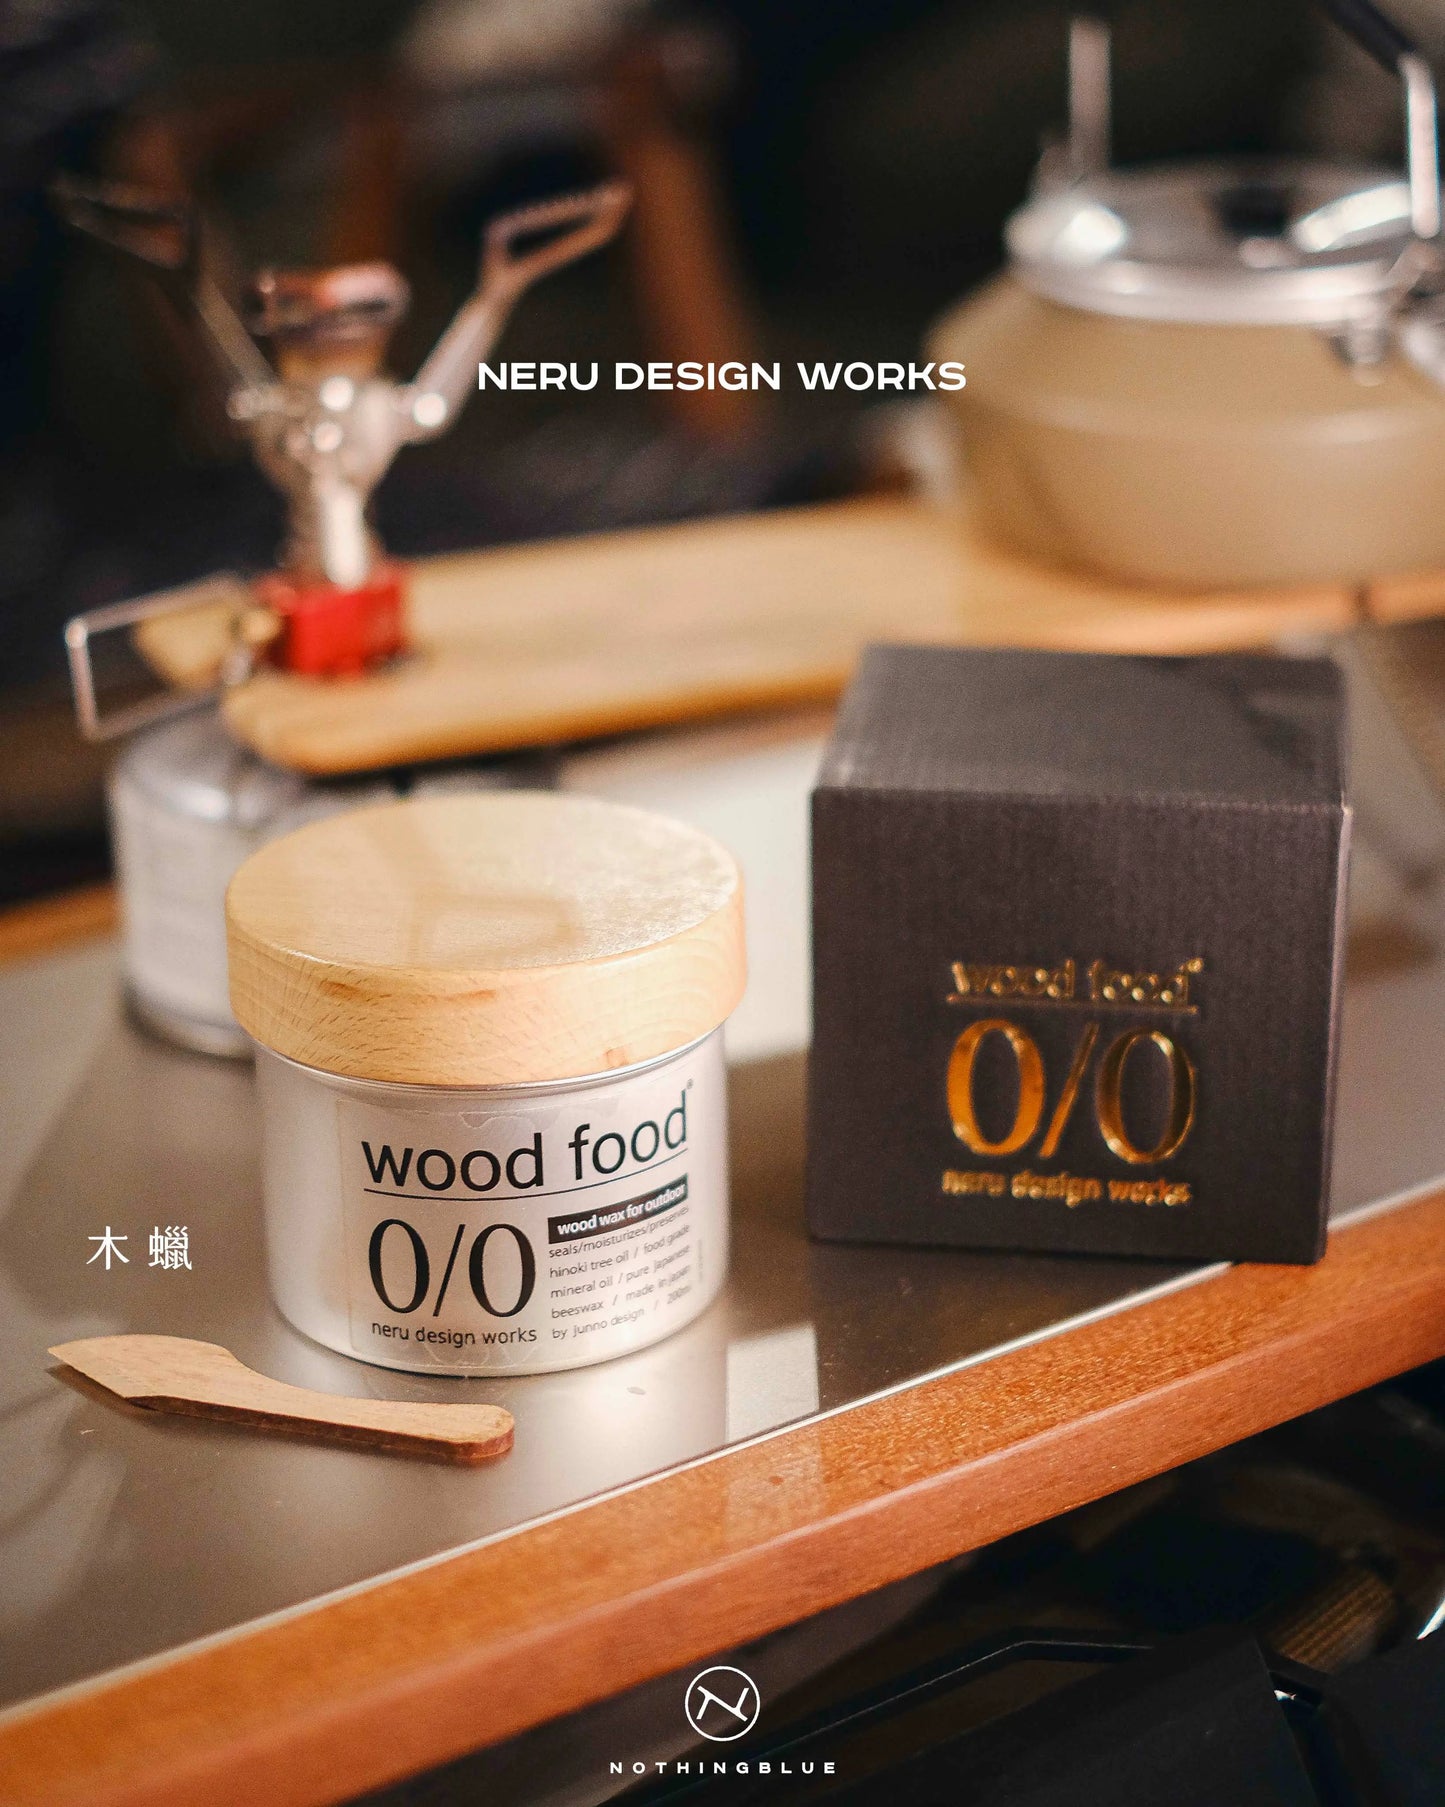 Neru design works x Woodfood Wax 200 蜂蠟